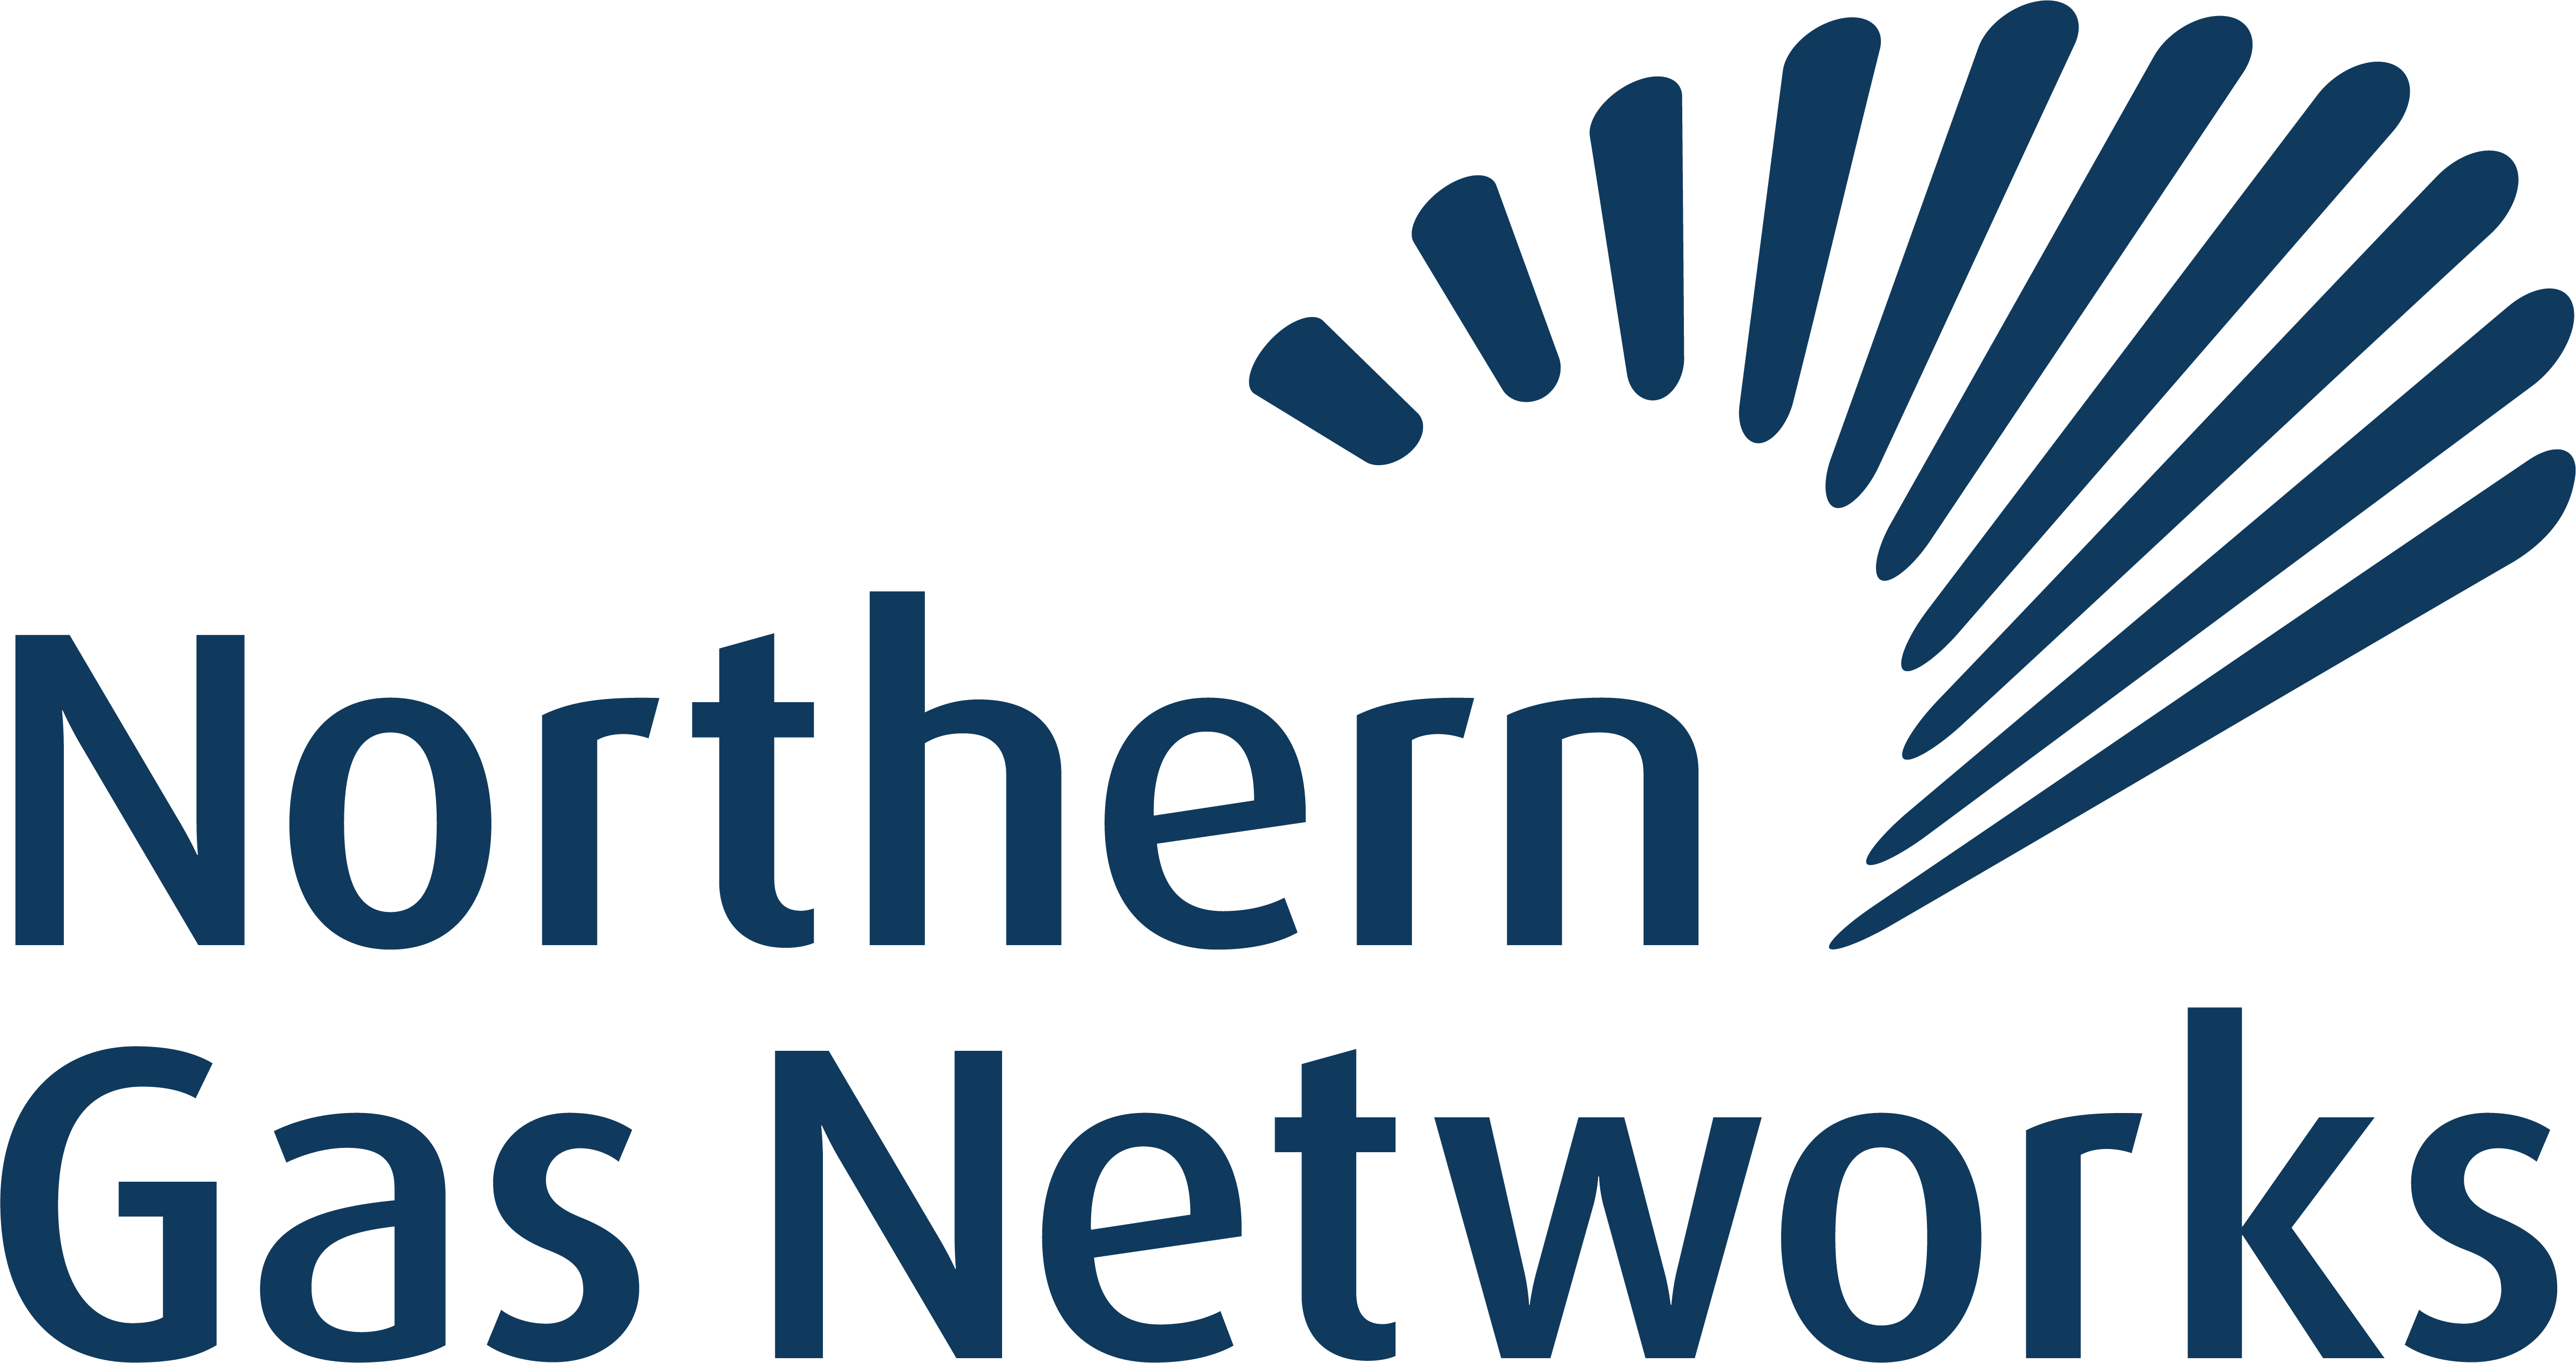 Northern Gas Network